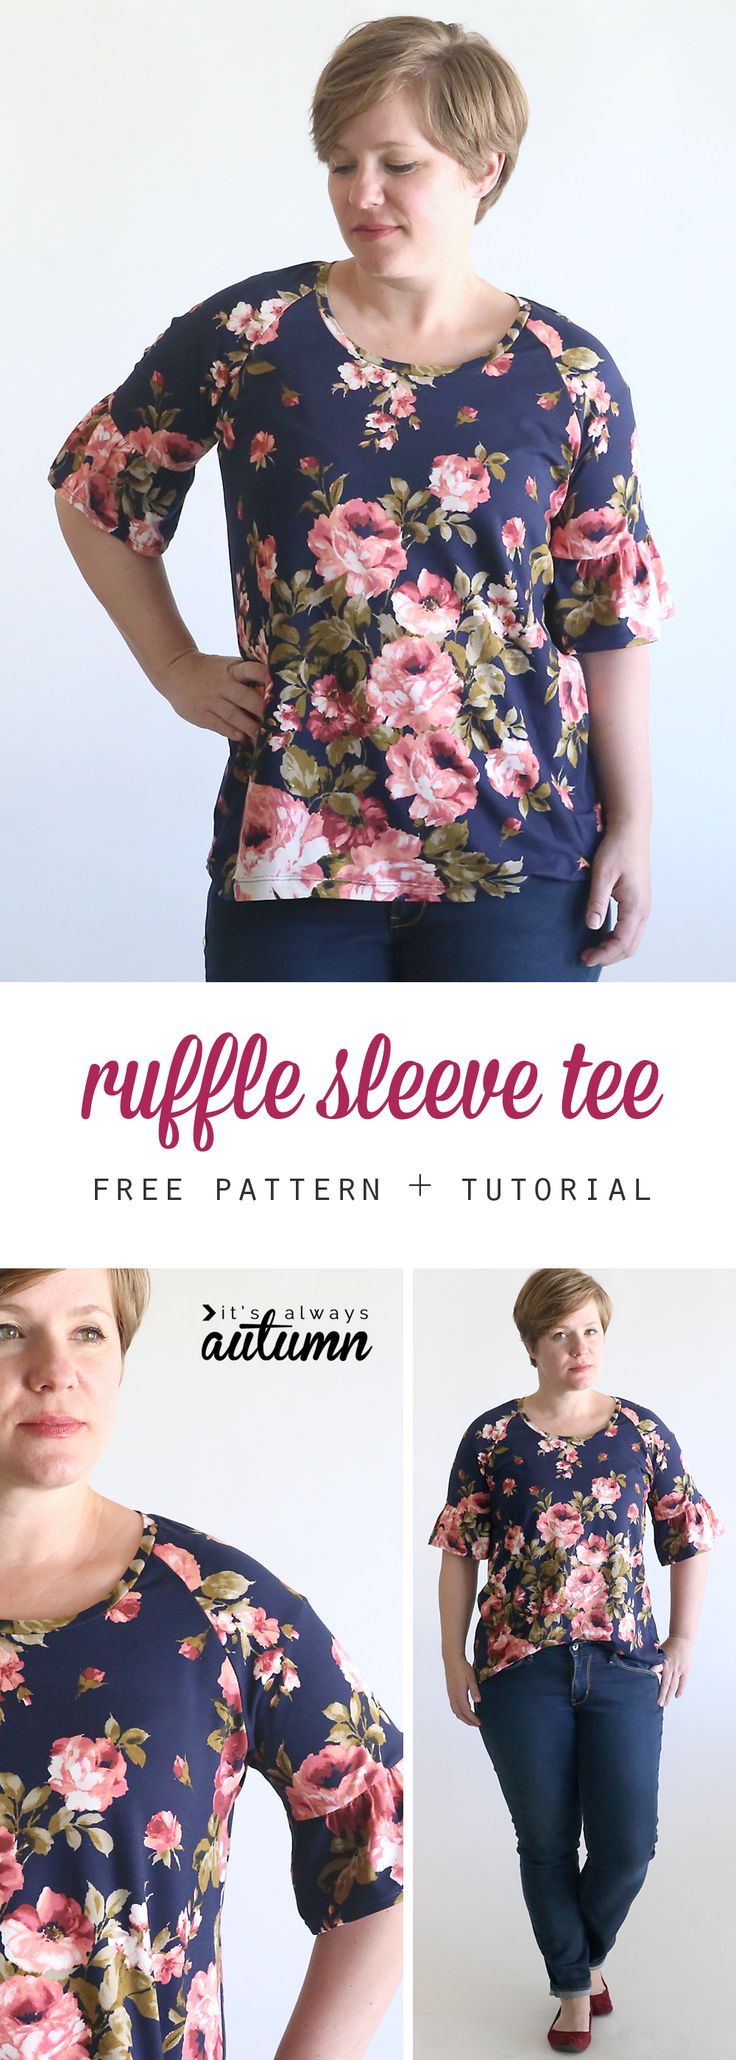 how to make sewing patterns pdf